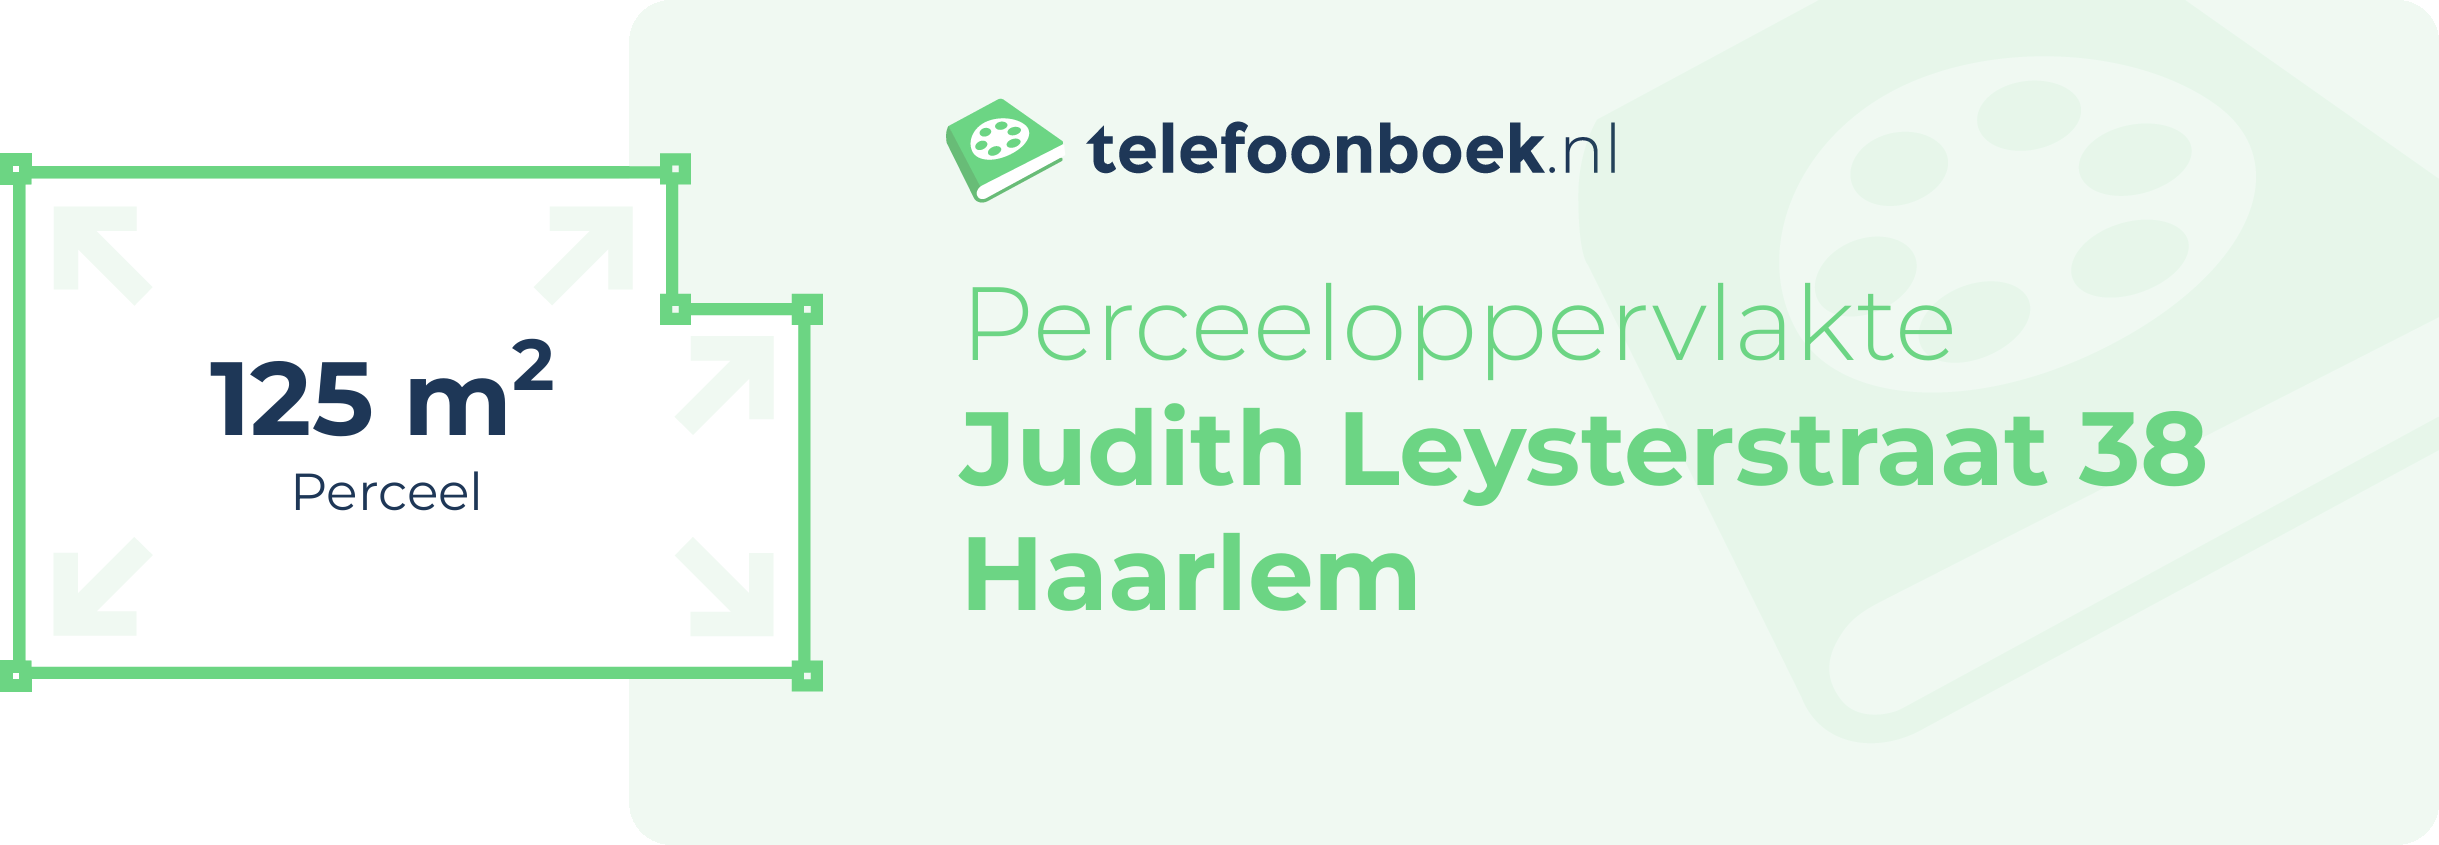 Perceeloppervlakte Judith Leysterstraat 38 Haarlem